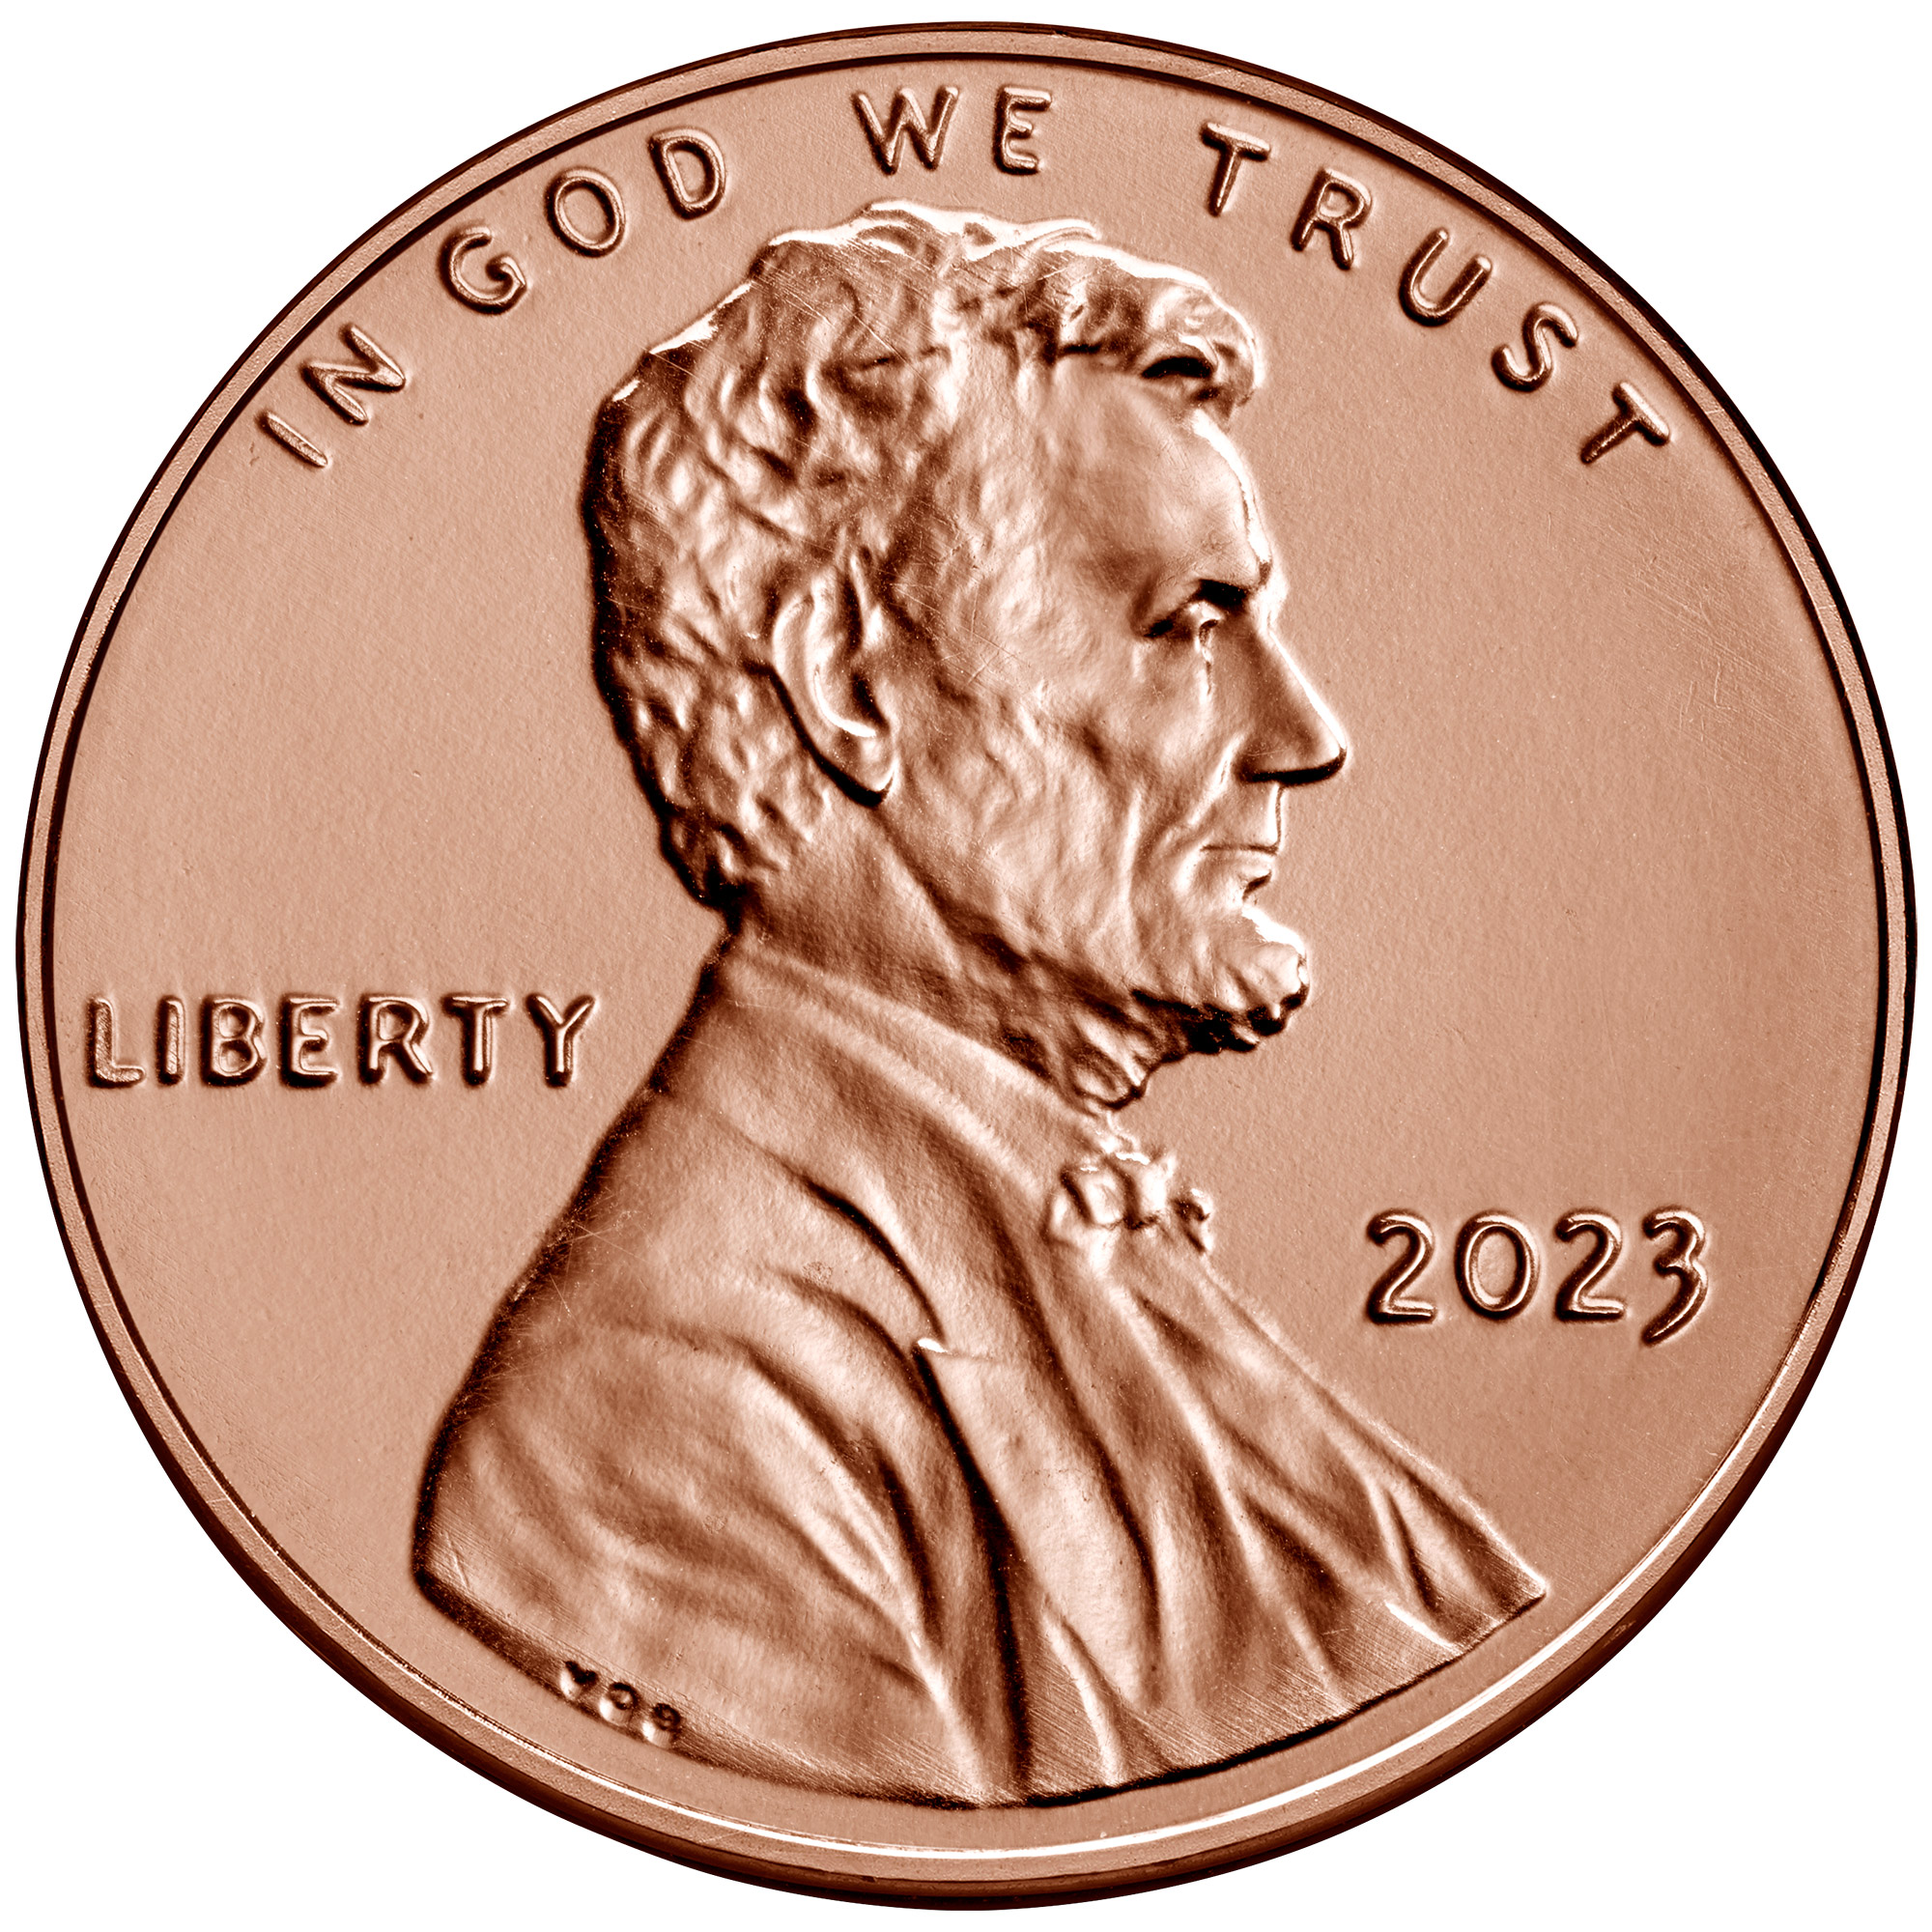 USA Currency Coins: Penny, Nickel, Dime, Quarter, Dollar, Half Dollar - Immihelp